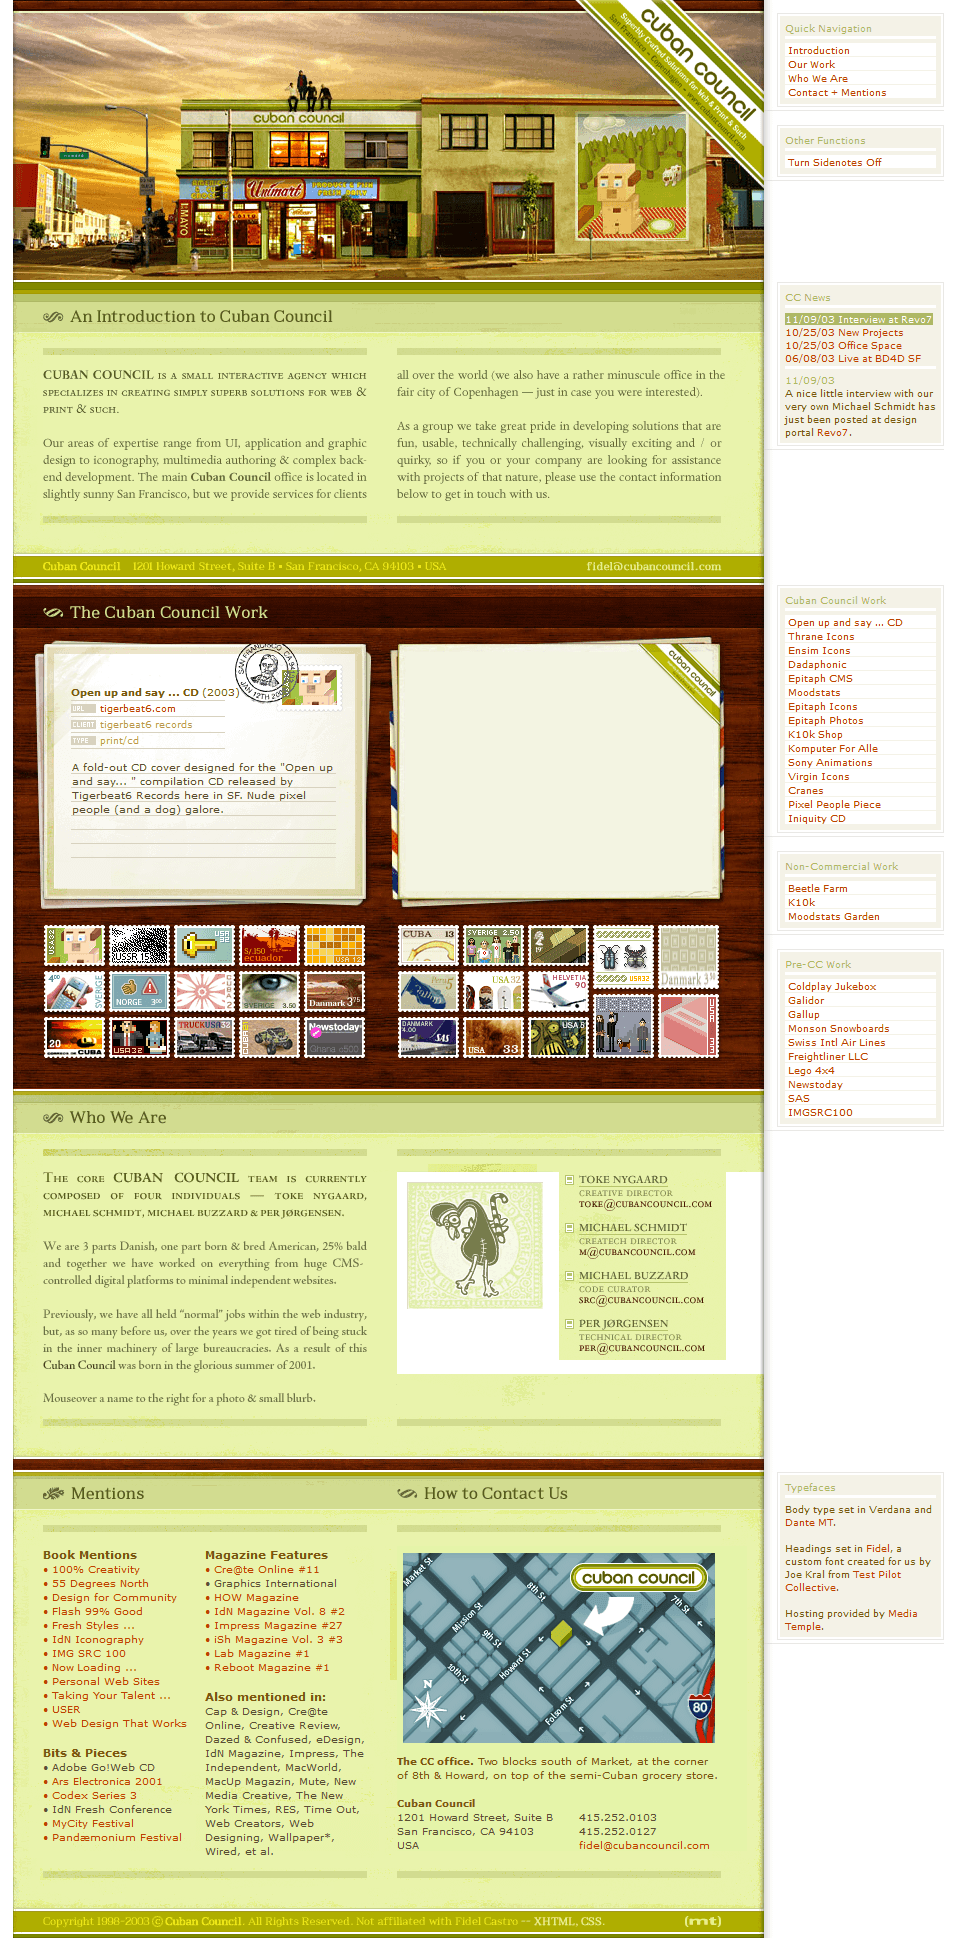 Cuban Council website in 2003